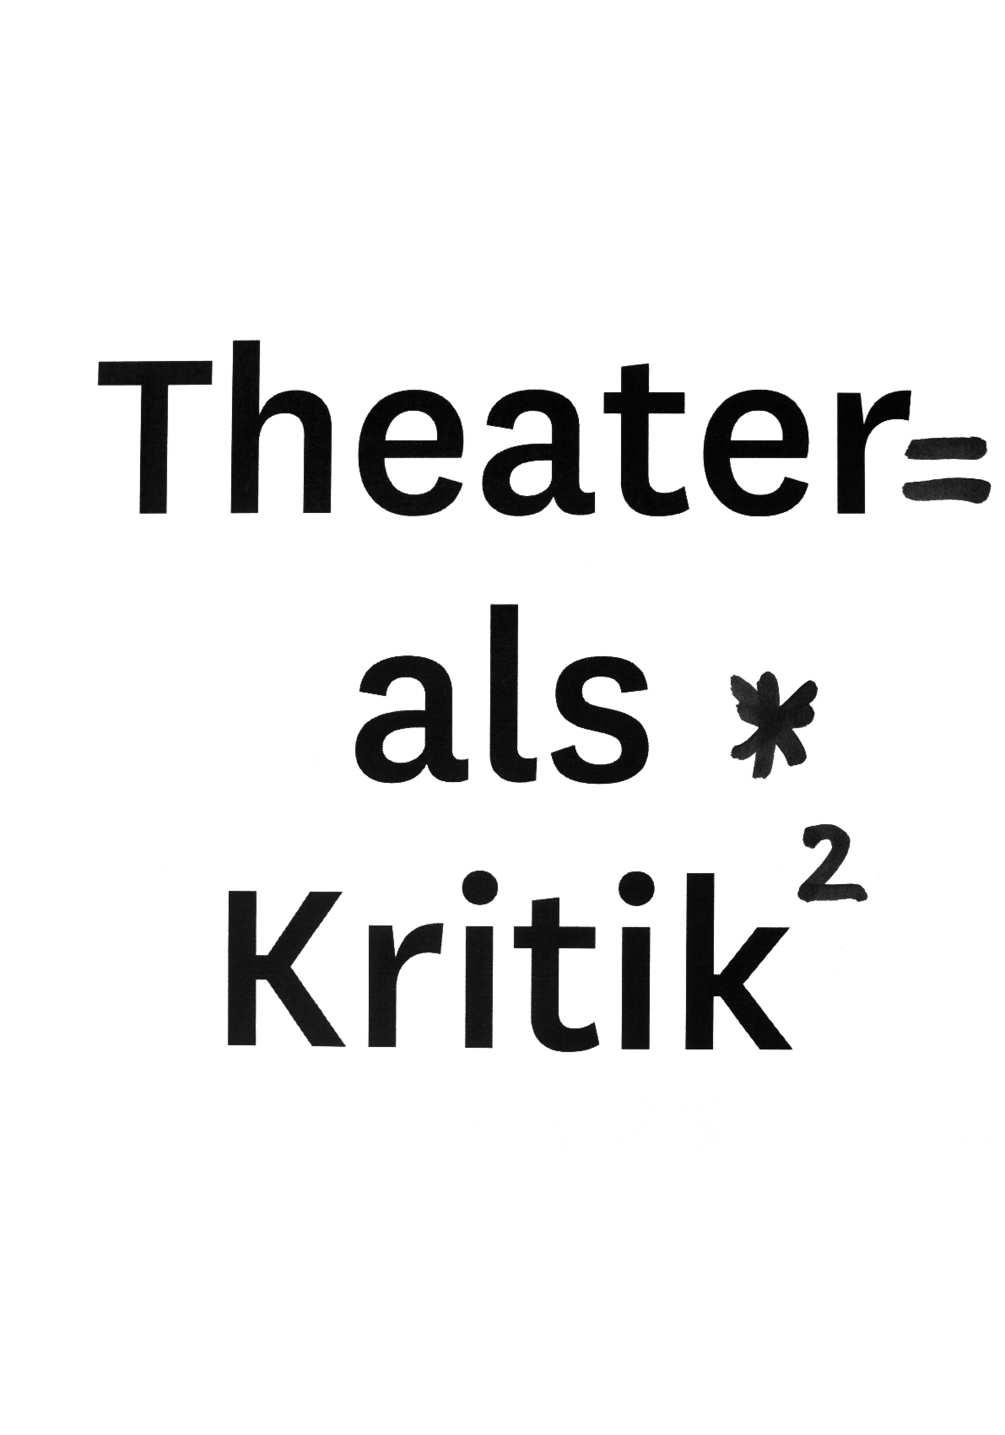 theater-as-critique-slip-01-1005x1435px